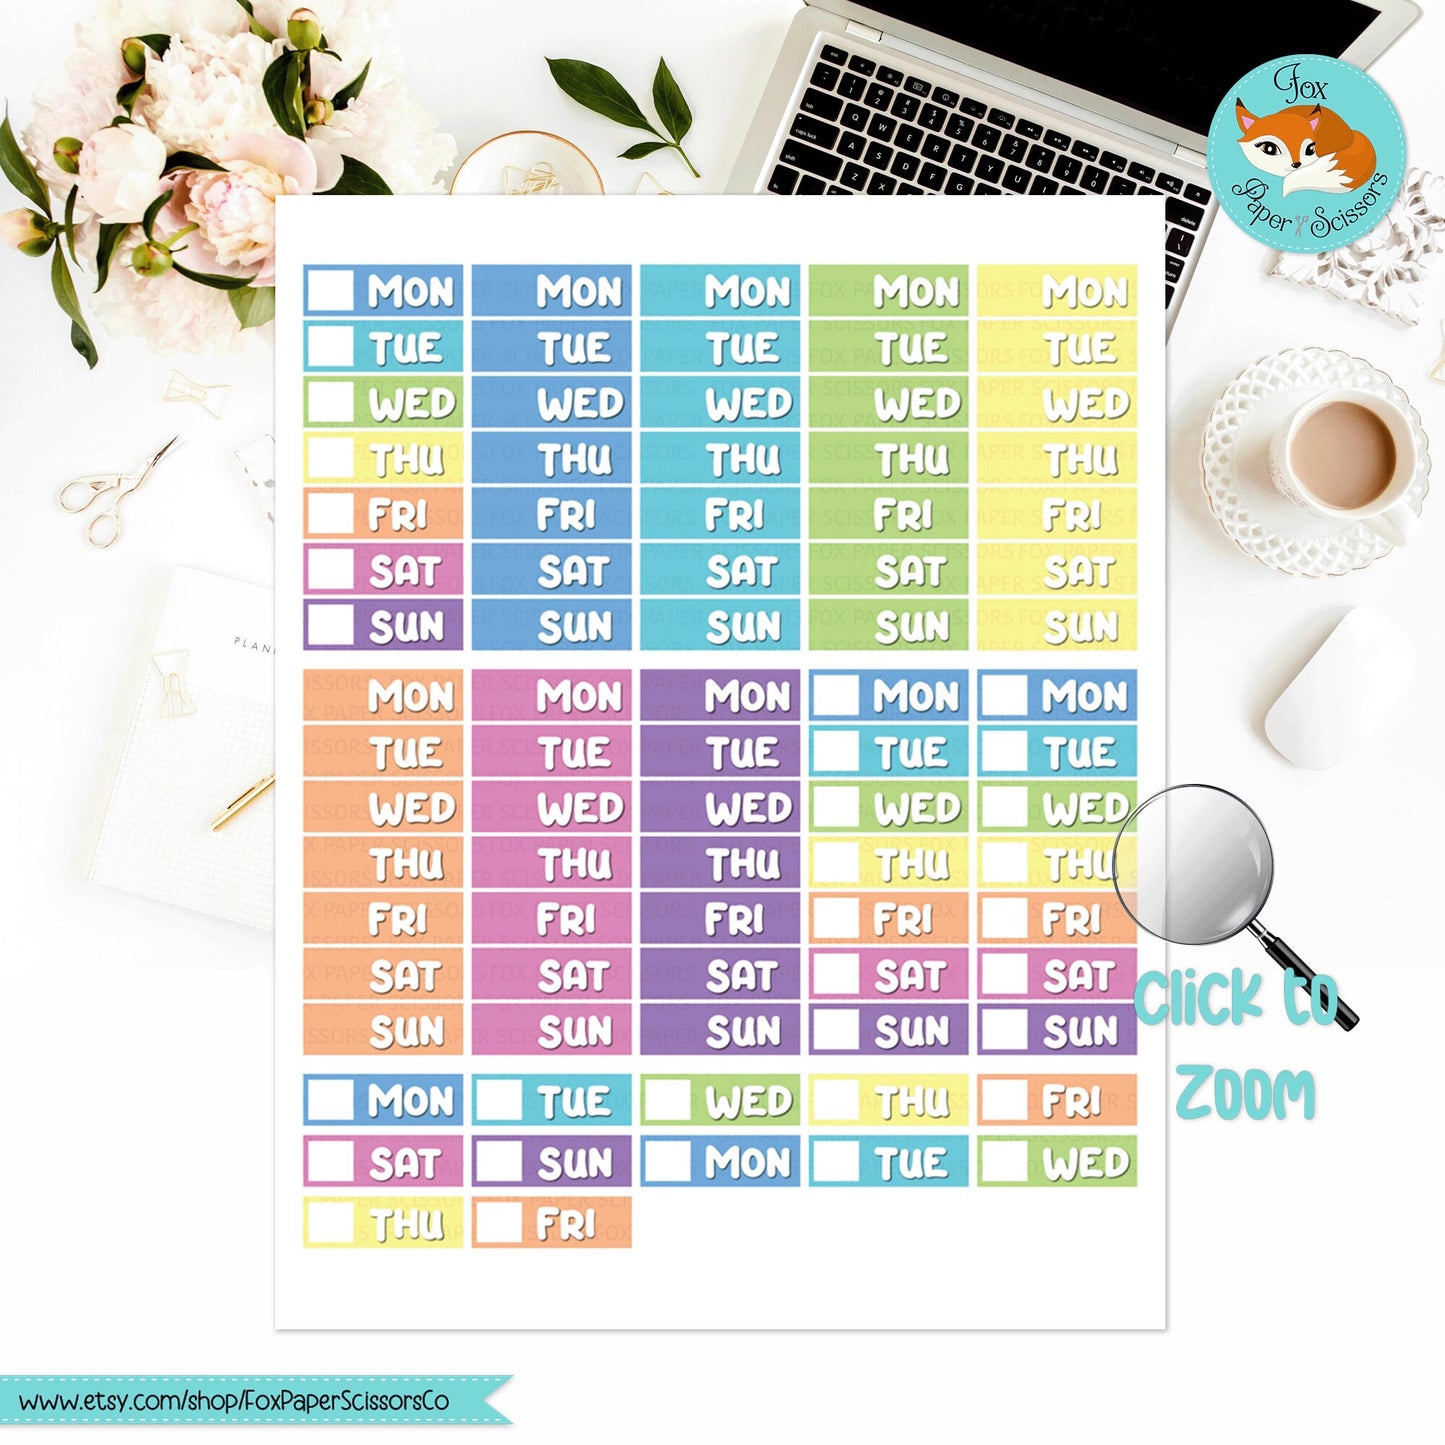 Neon Pastel Rainbow | Days of the Week Printable Planner Stickers